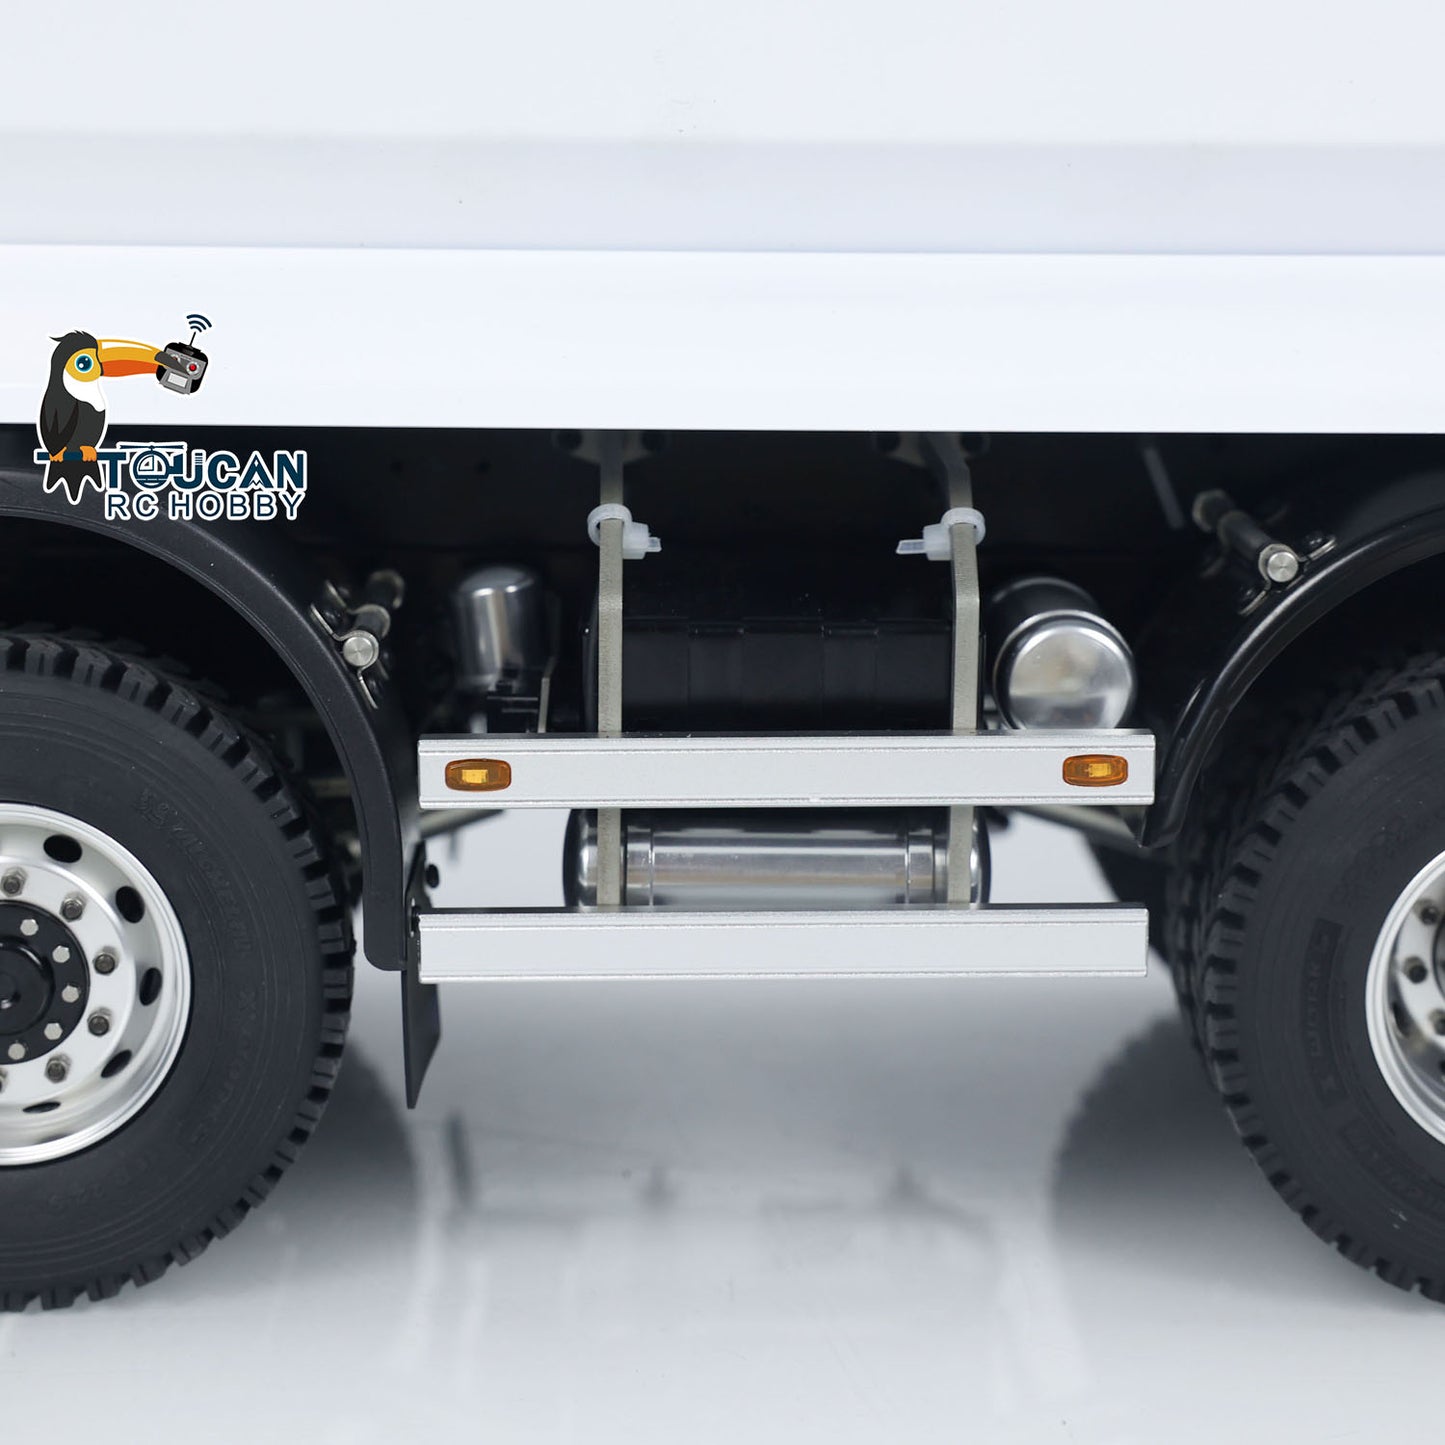 1:14 8x8 RC Hydraulic Equipment Radio Control Tipper Car 2-speed Dump Truck DIY Model Sound Light I6S LED Light Sound